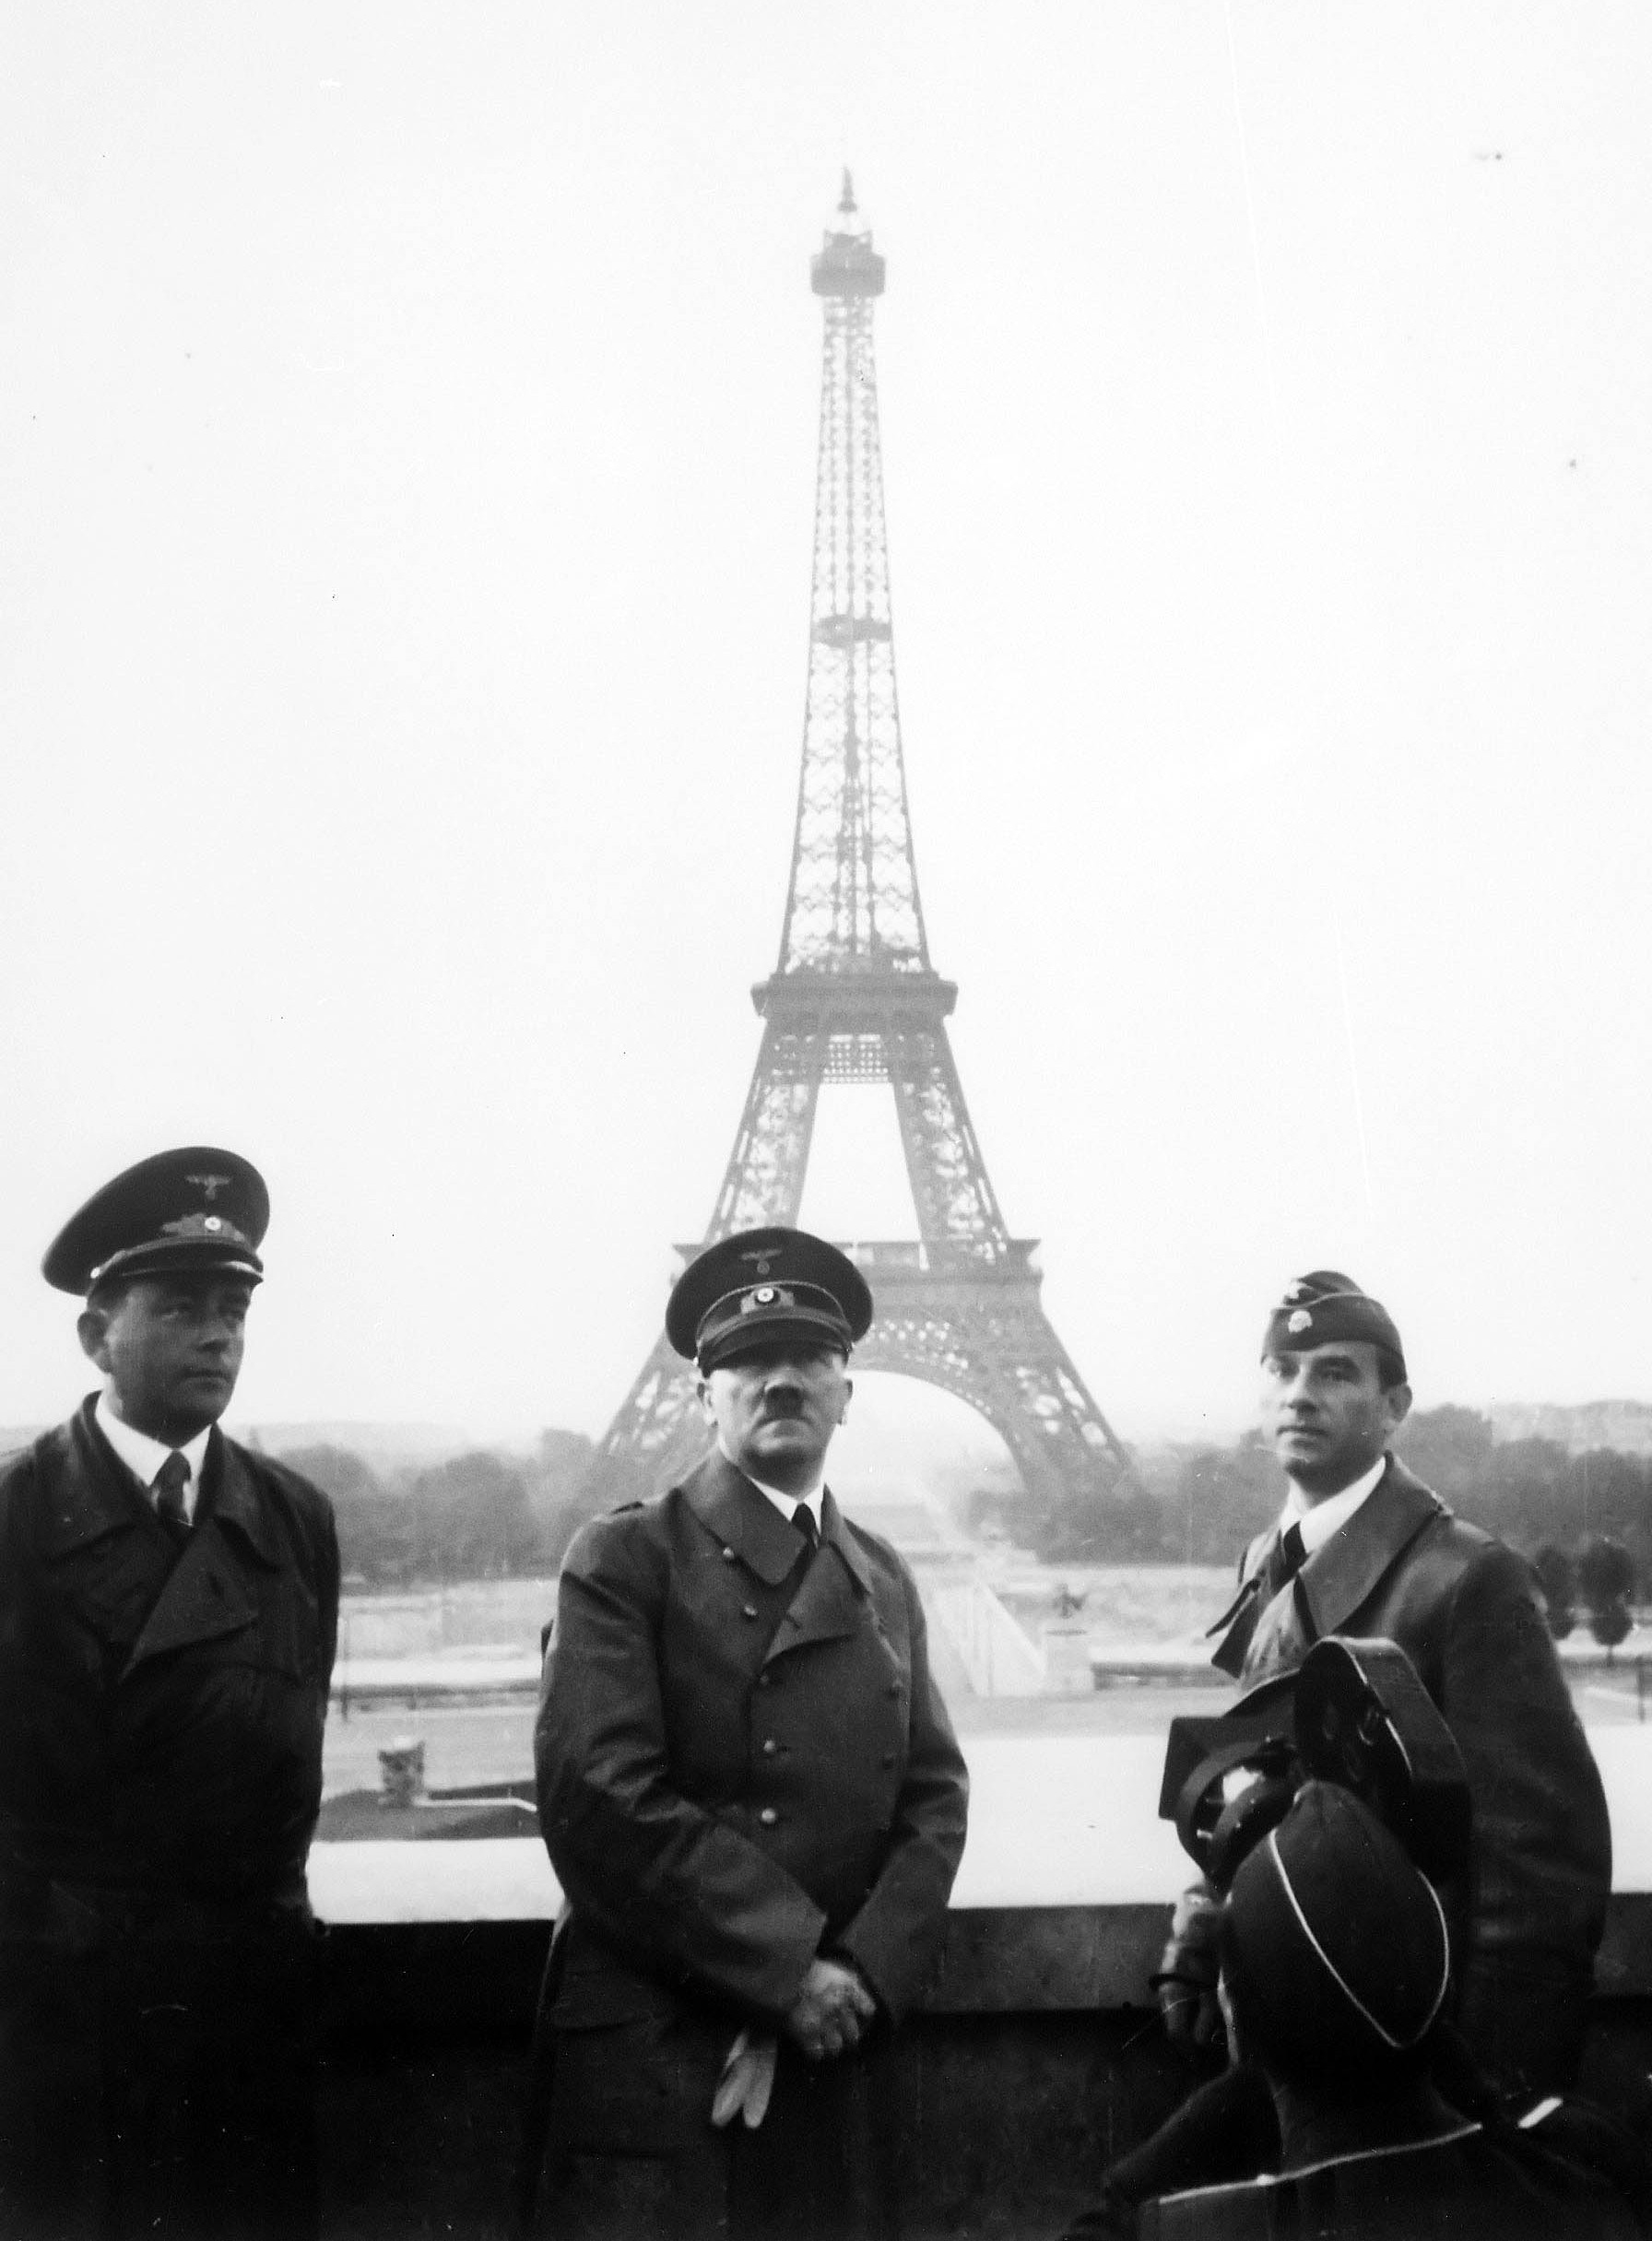 People 1792x2431 France Eiffel Tower World War II Paris Adolf Hitler history Nazi National Socialism dictators